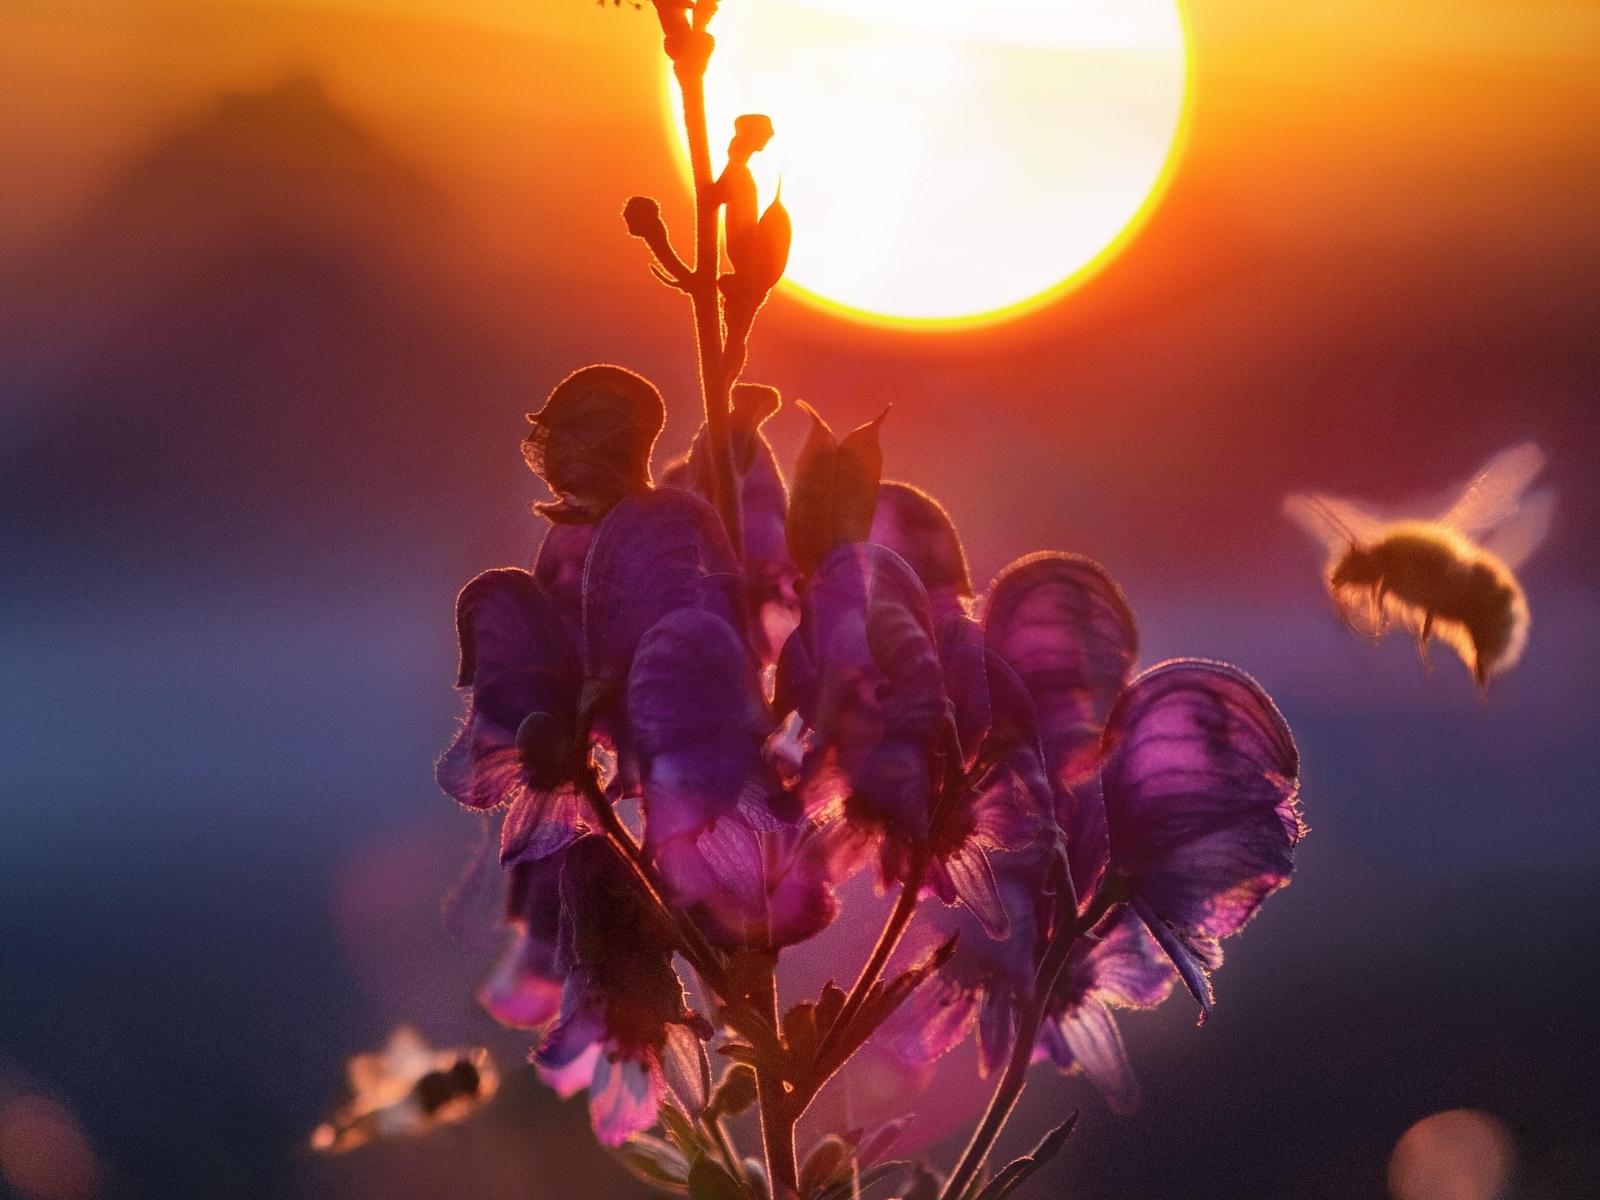 Image: Bee, flower, sun, sunset, glare, blur